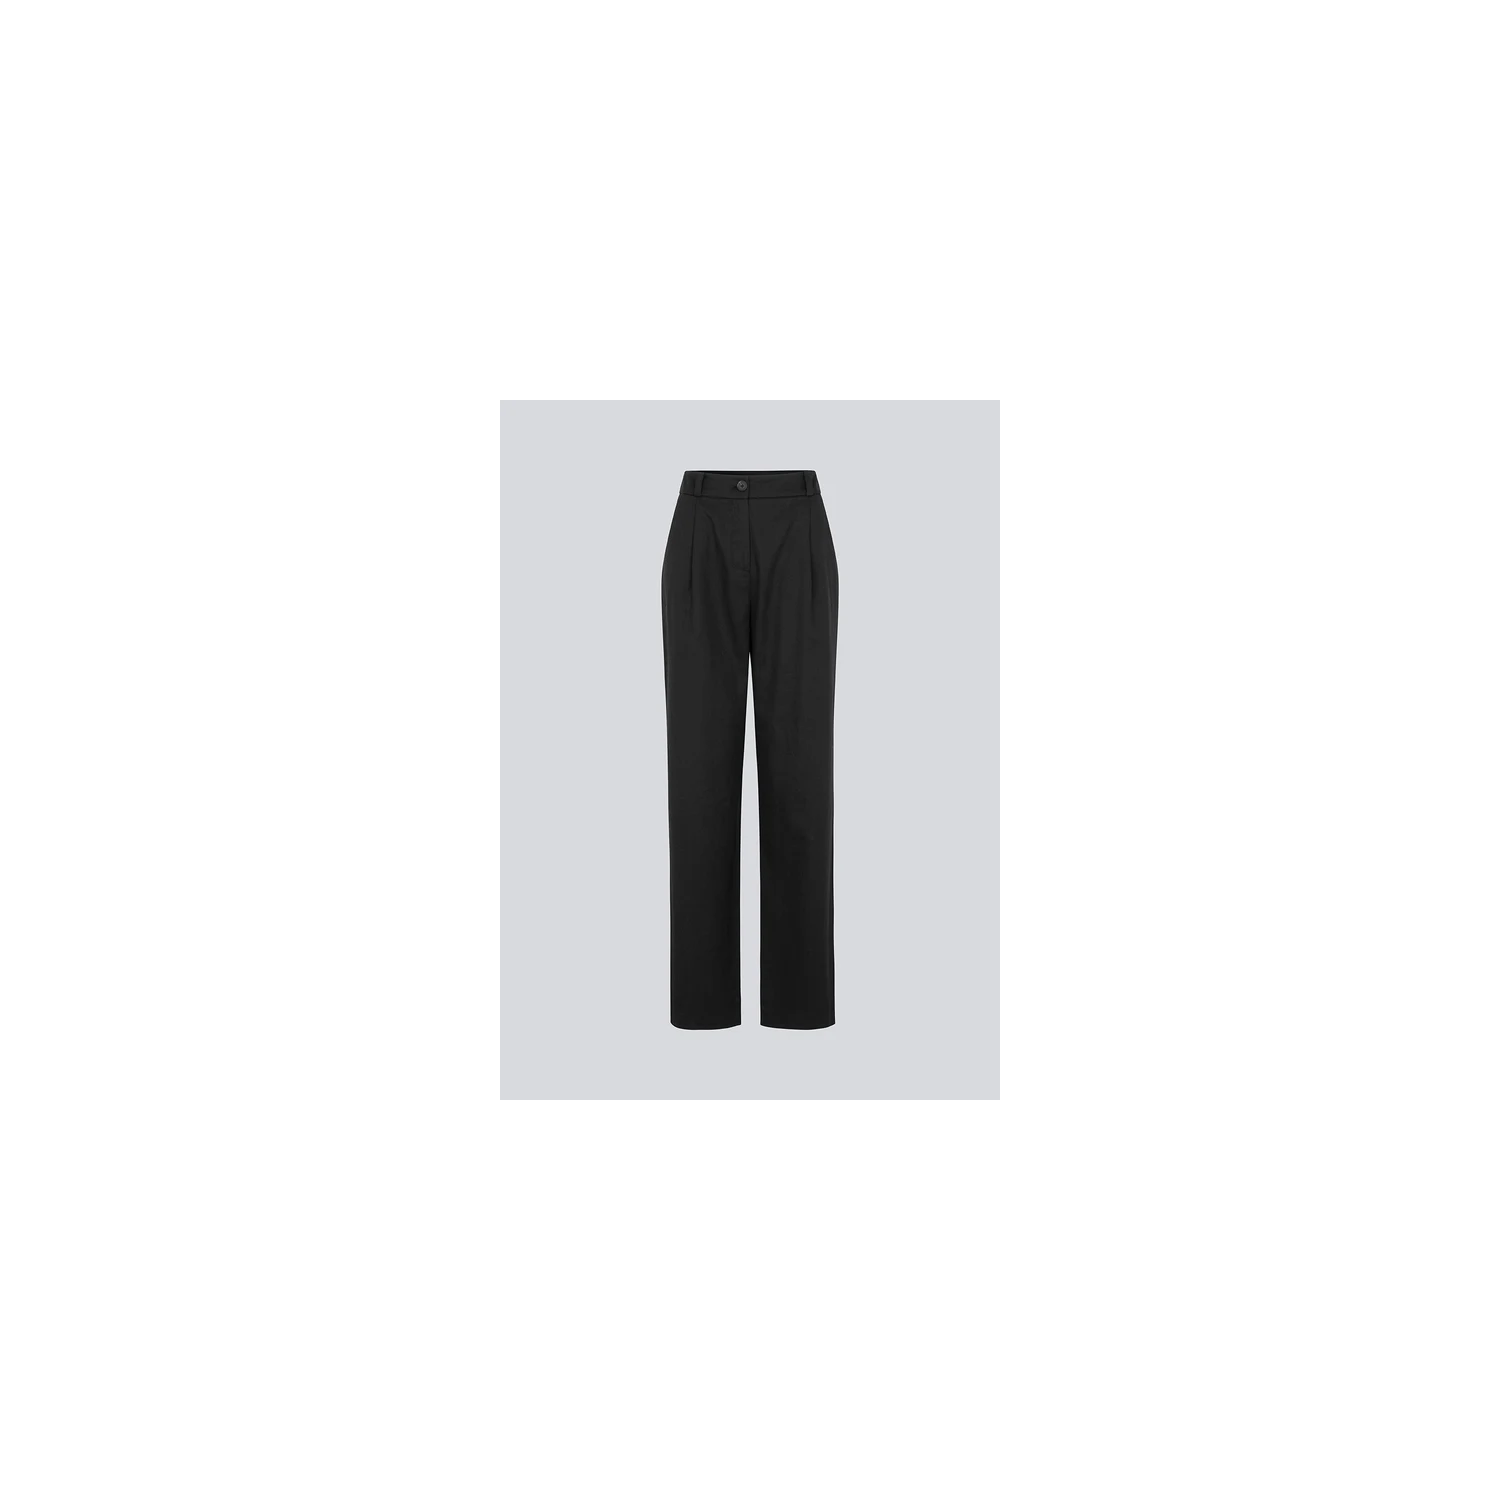 Modstrom parkMD pants black